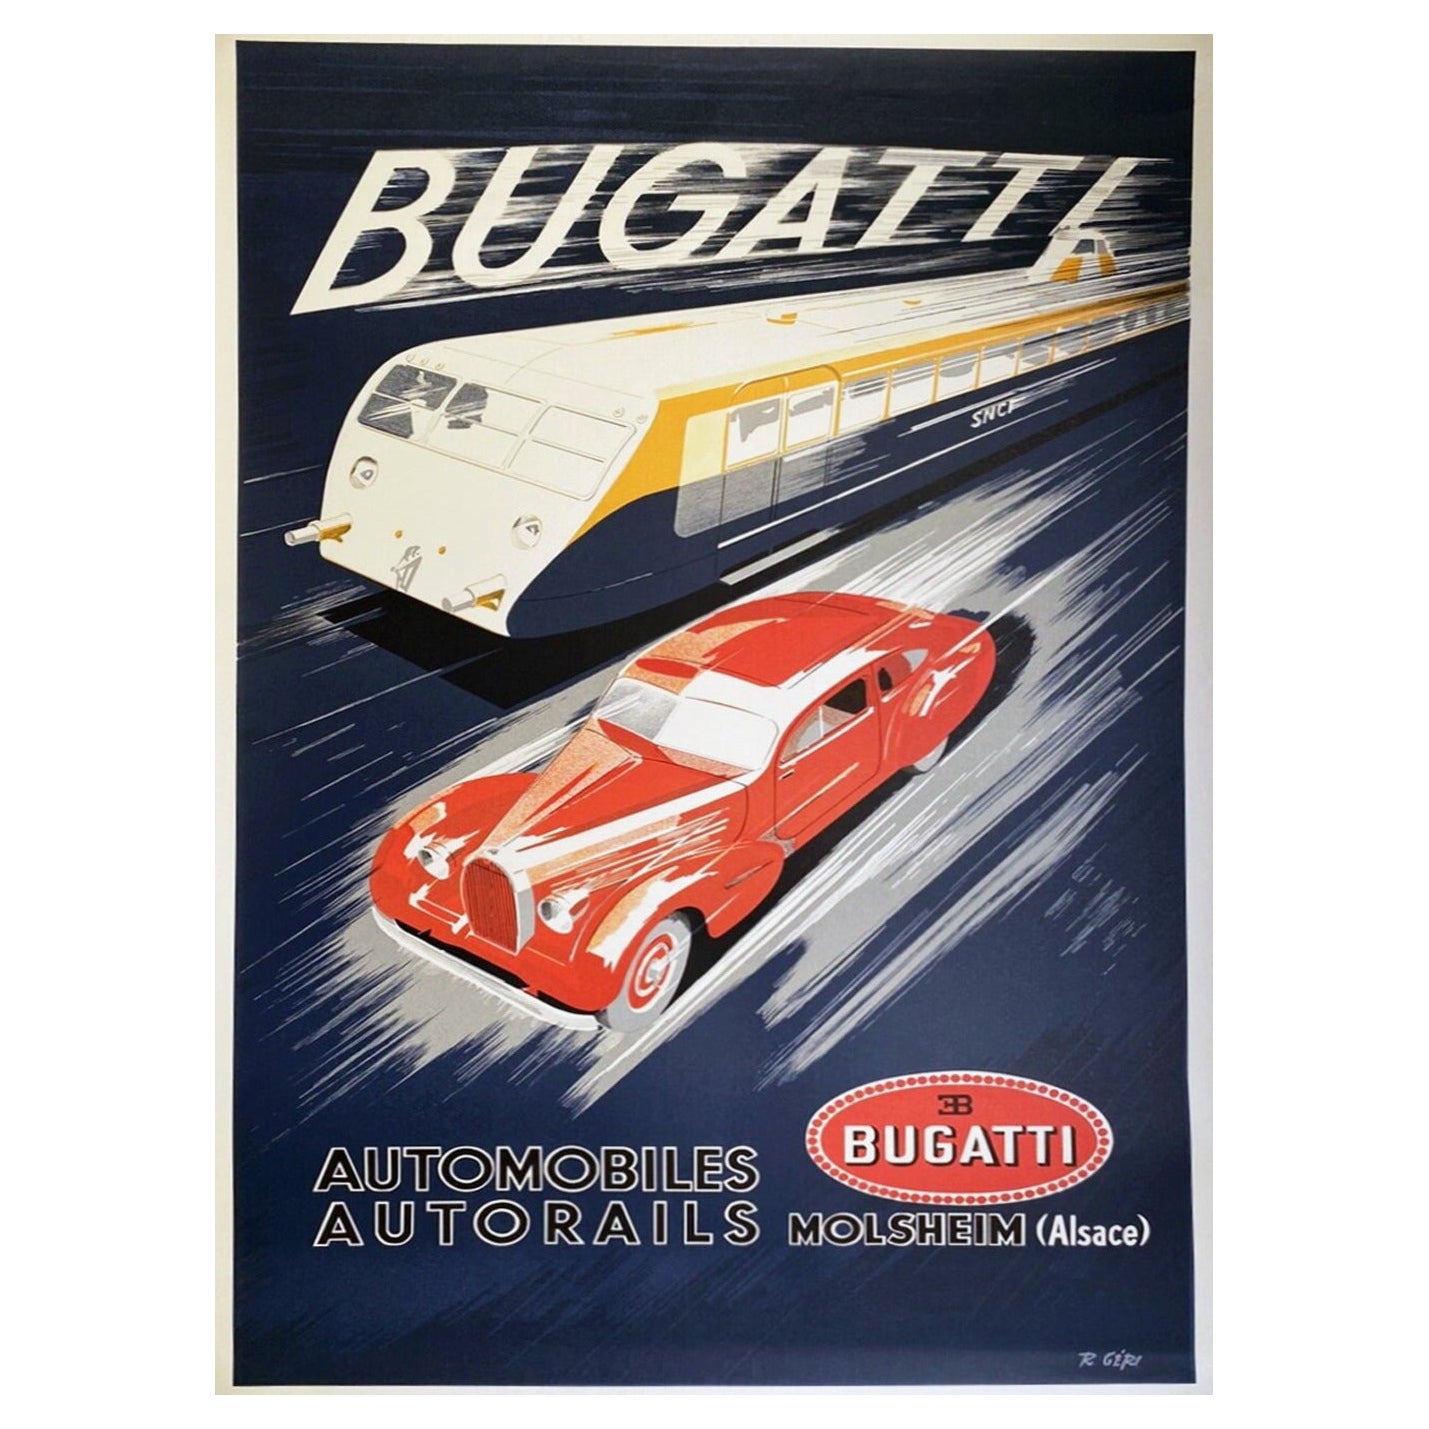 Affiche rétro originale de Bugatti, 1970